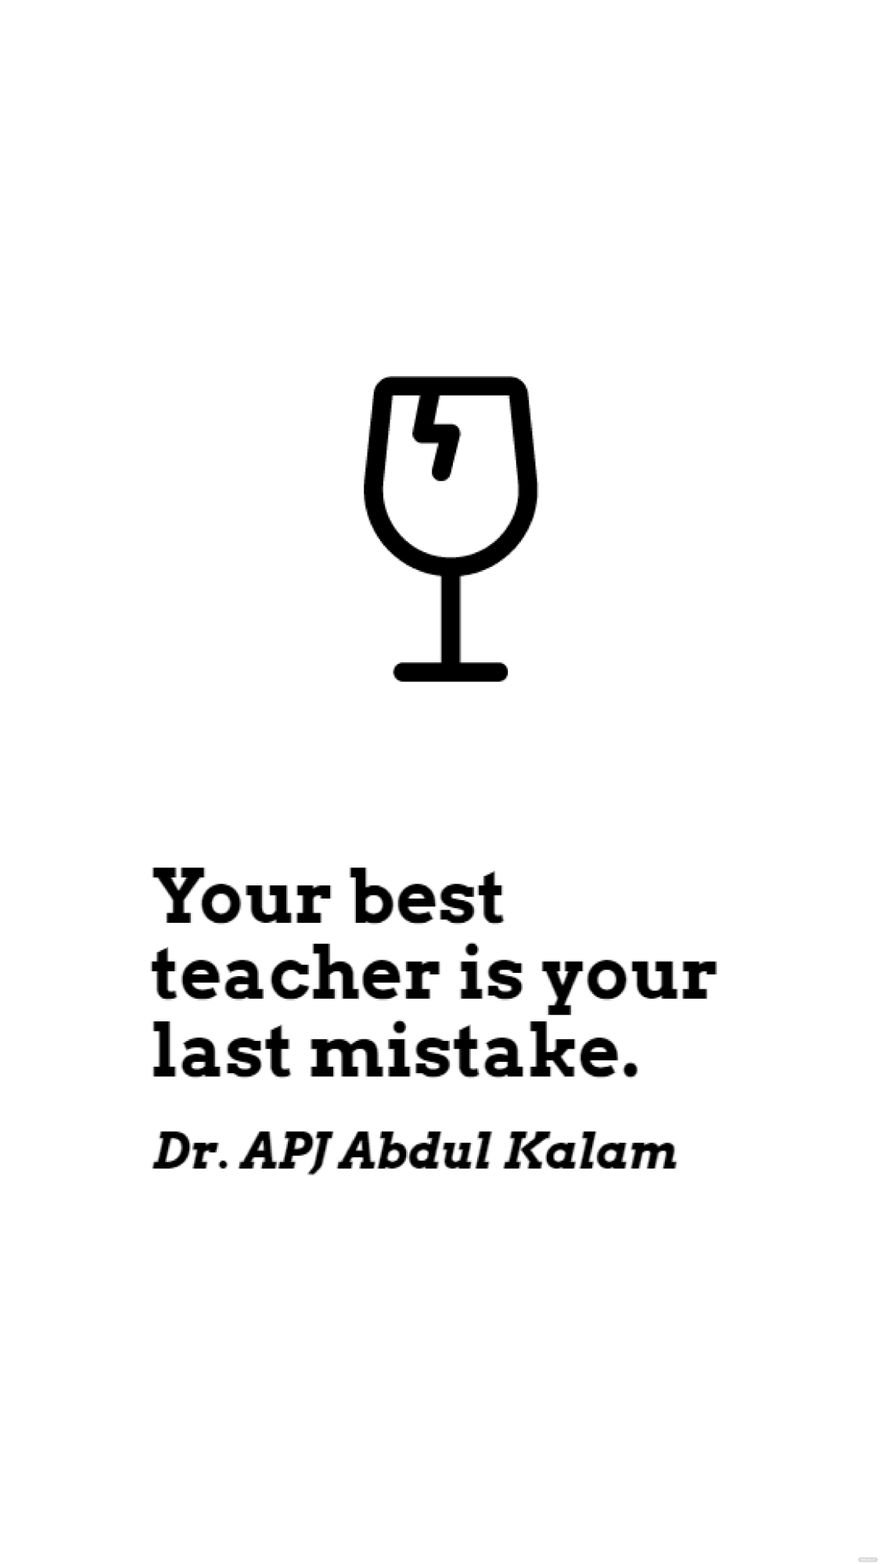 Dr. APJ Abdul Kalam - Your best teacher is your last mistake.